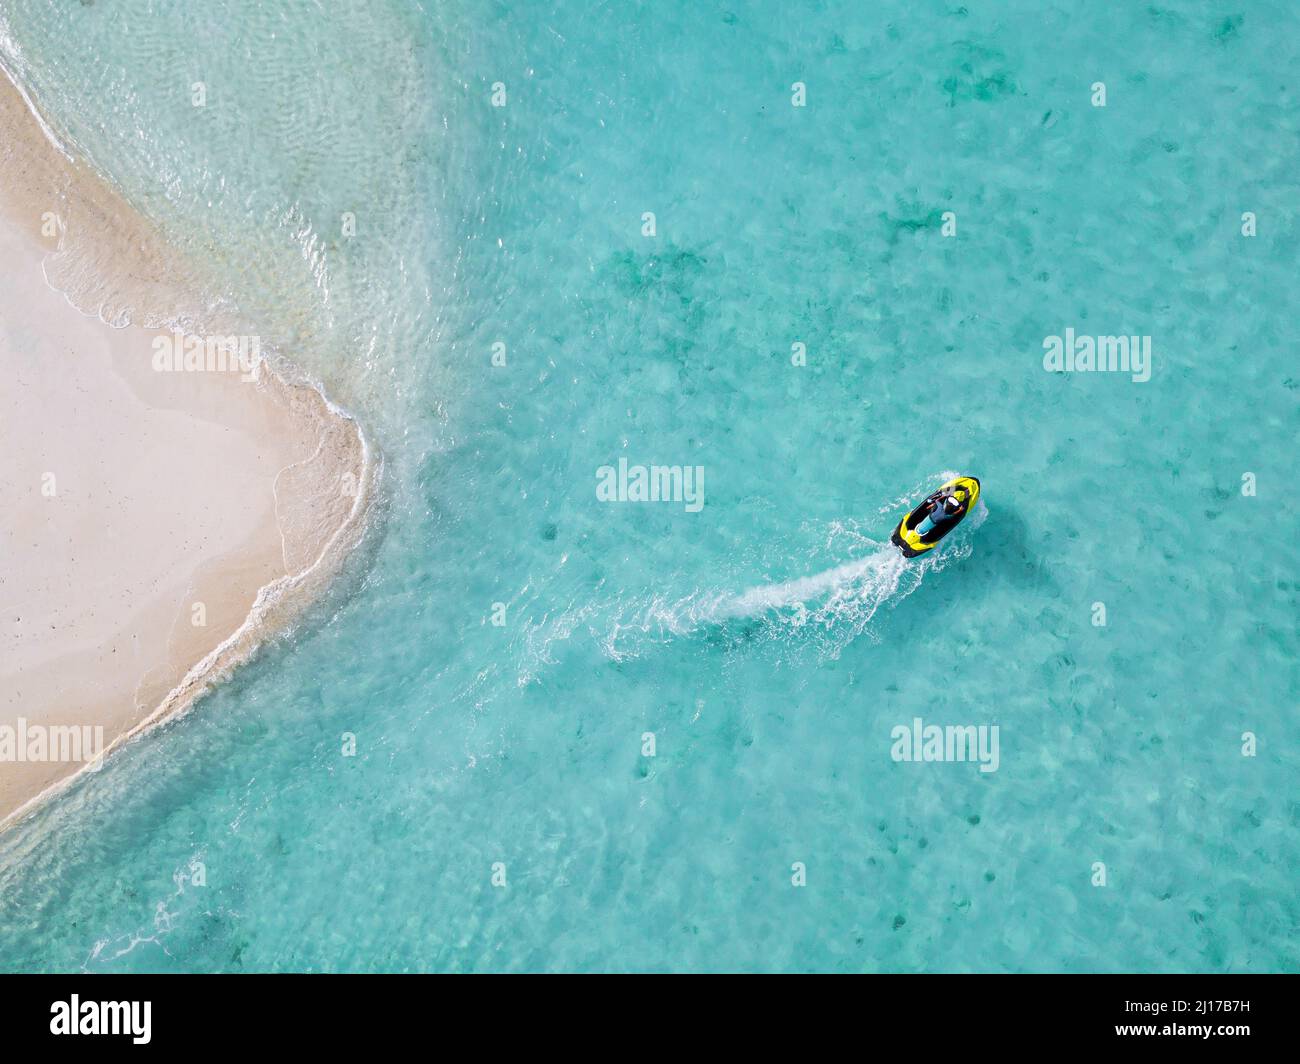 Man driving personal watercraft in sea Stock Photo